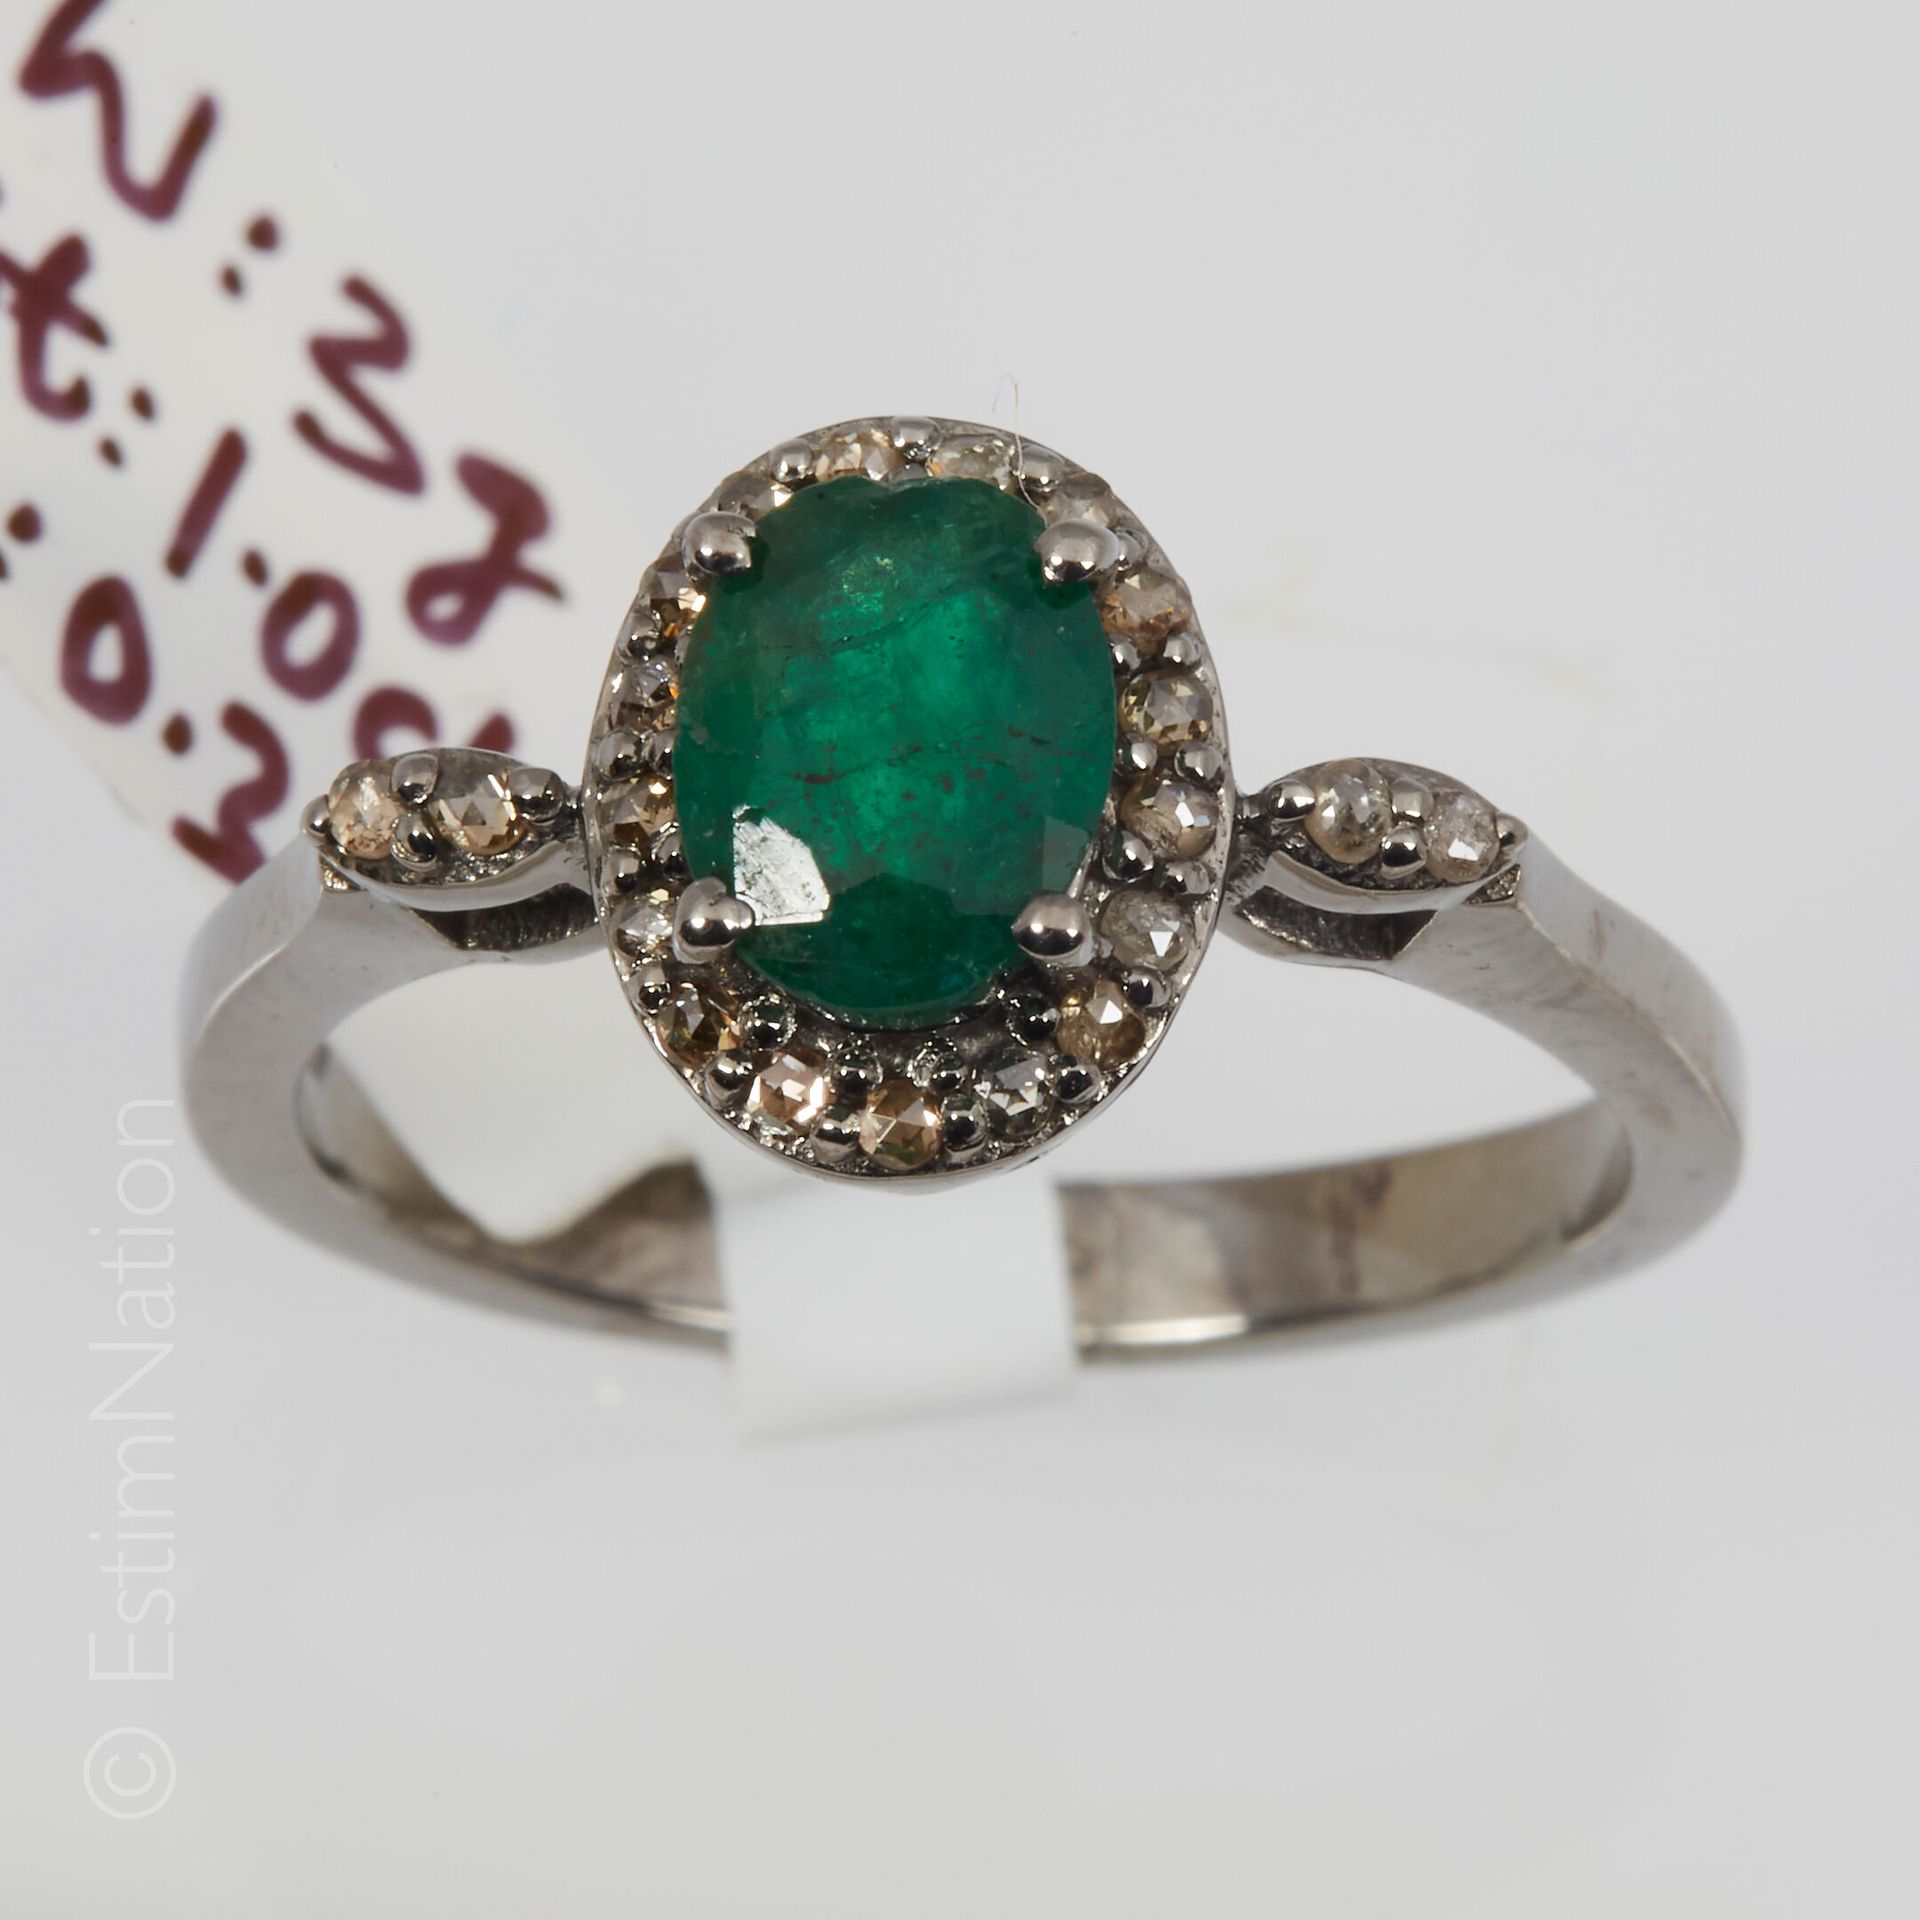 BAGUE ARGENT EMERAUDE 银戒指（千分之九百二十五），装饰有爪式镶嵌的椭圆形刻面祖母绿，周围有粉红色切割的小钻石支撑。转指：54。毛重：3克。&hellip;